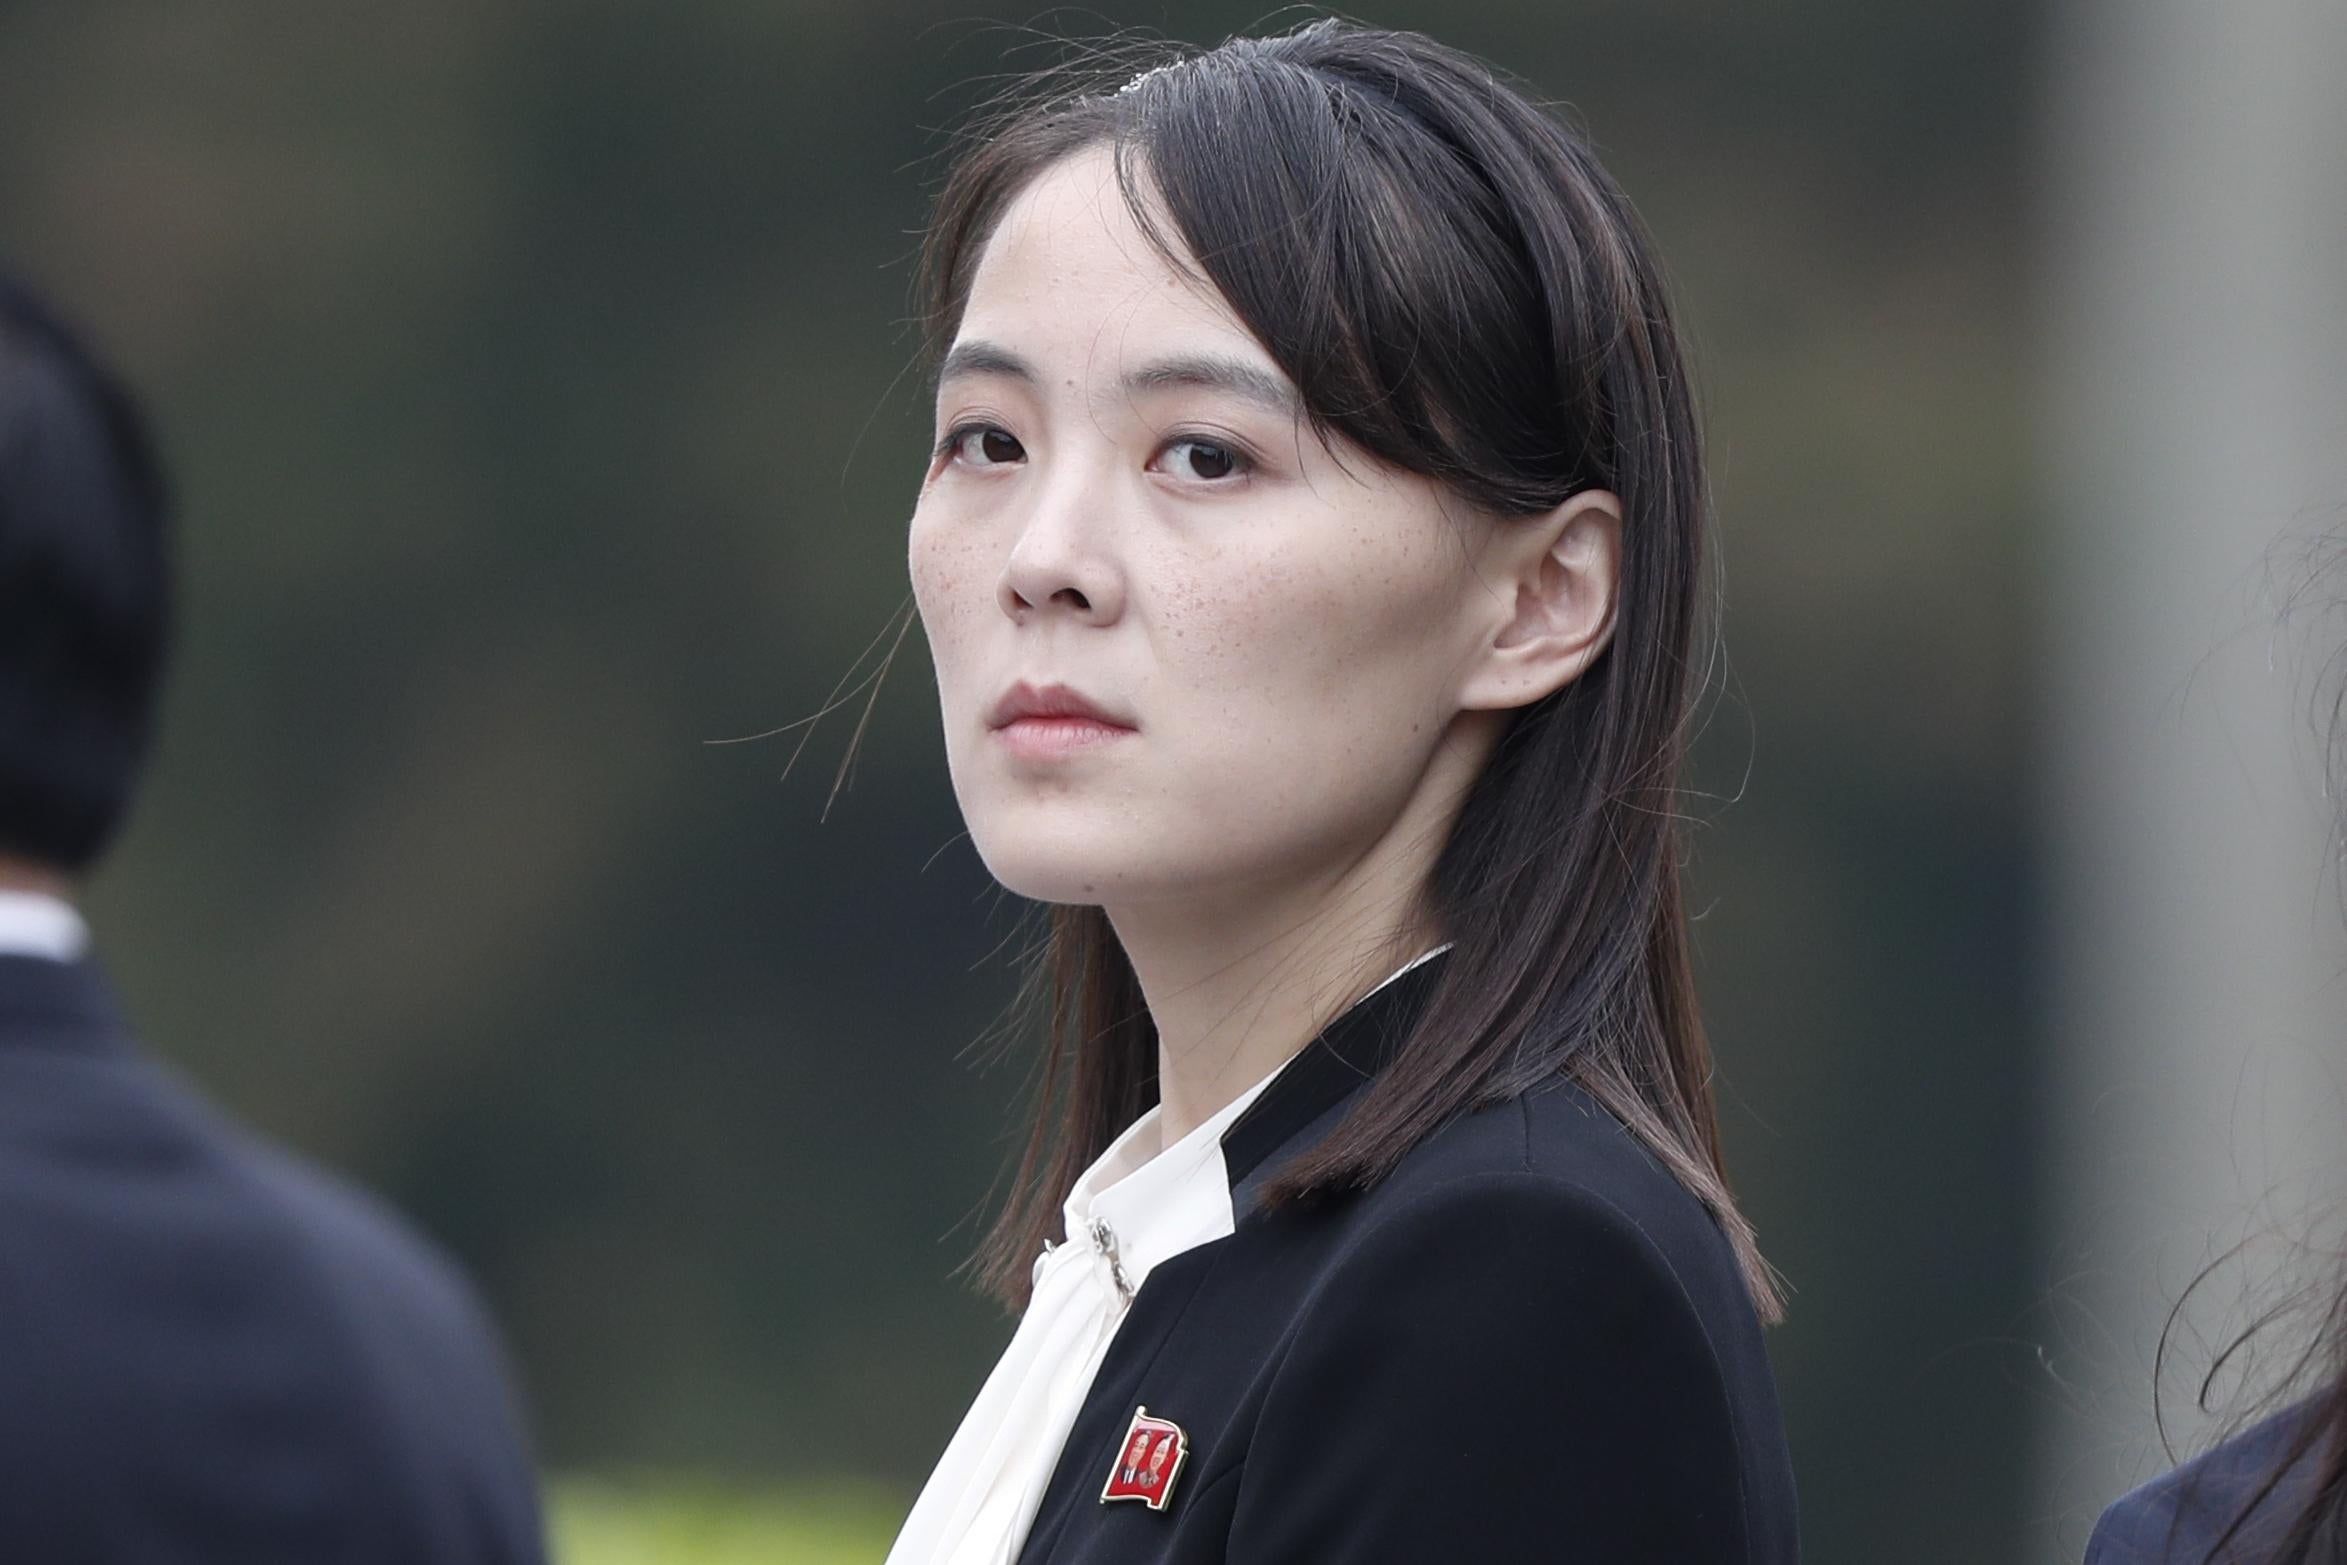 Kim Yo-jong looks back over her shoulder at the camera.